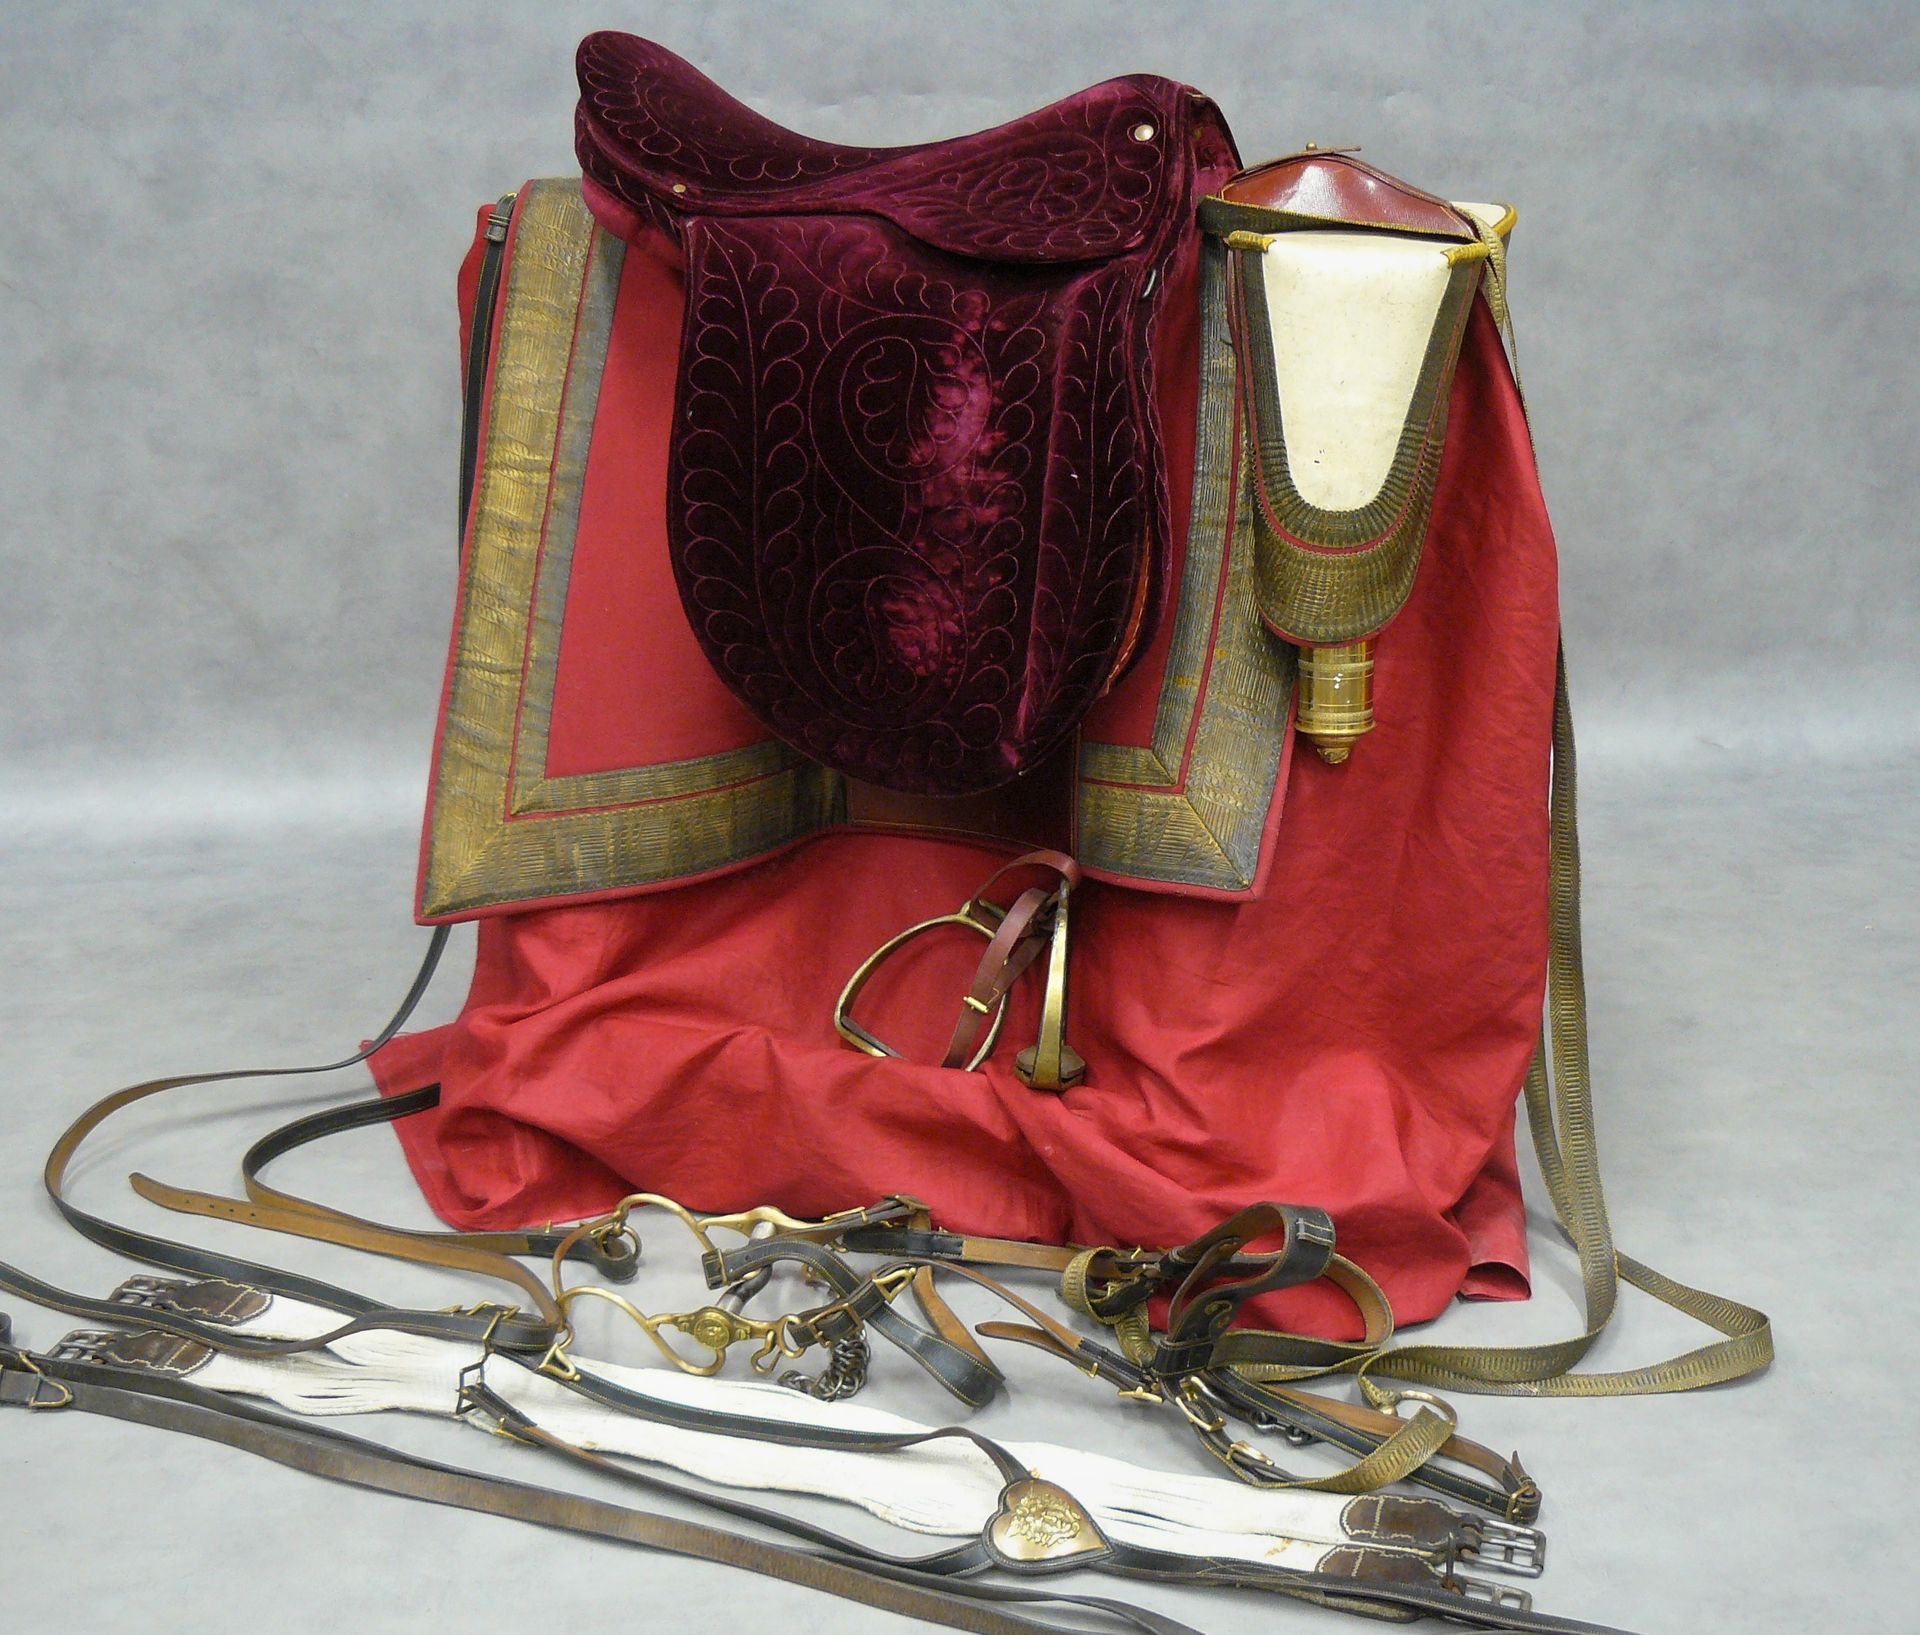 Null 一套漂亮的将军礼仪：一个红色天鹅绒马鞍（有些蛀孔），一个红色马鞍布，一对字体，一个胸牌，一个美杜莎头盔，两个铜马镫，和一个腰带